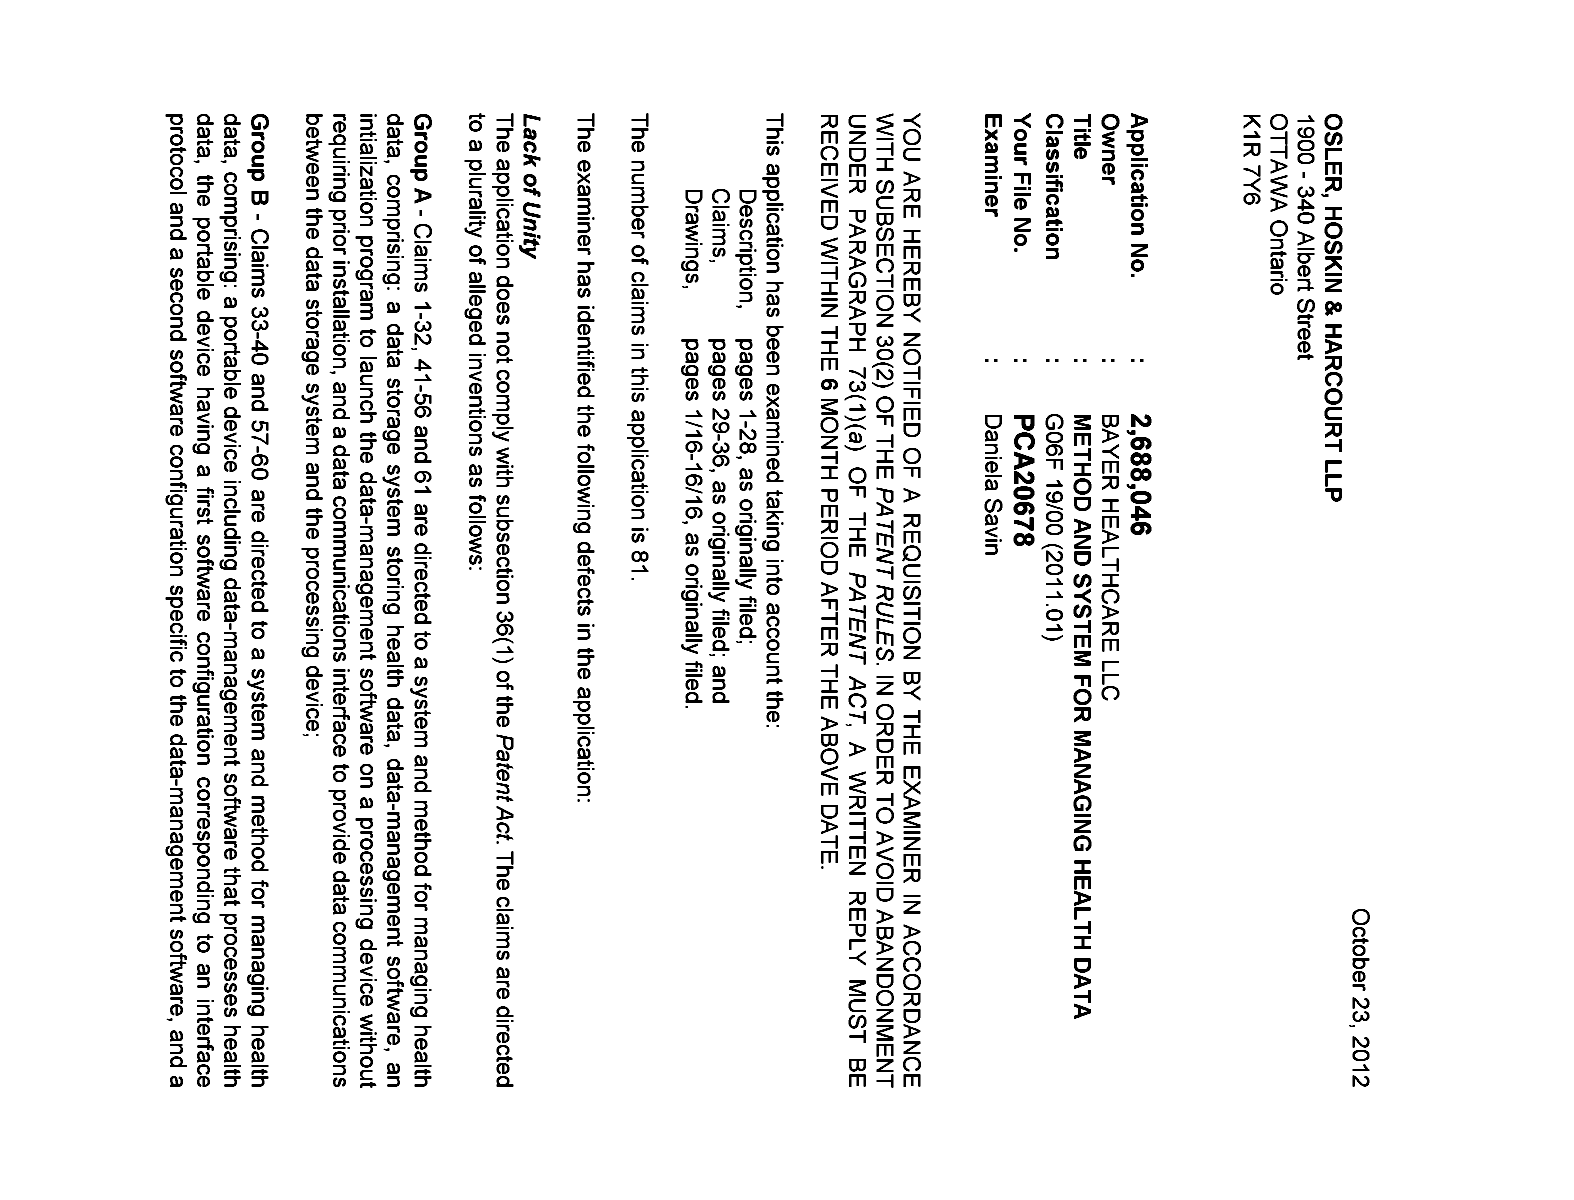 Canadian Patent Document 2688046. Prosecution-Amendment 20121023. Image 1 of 2